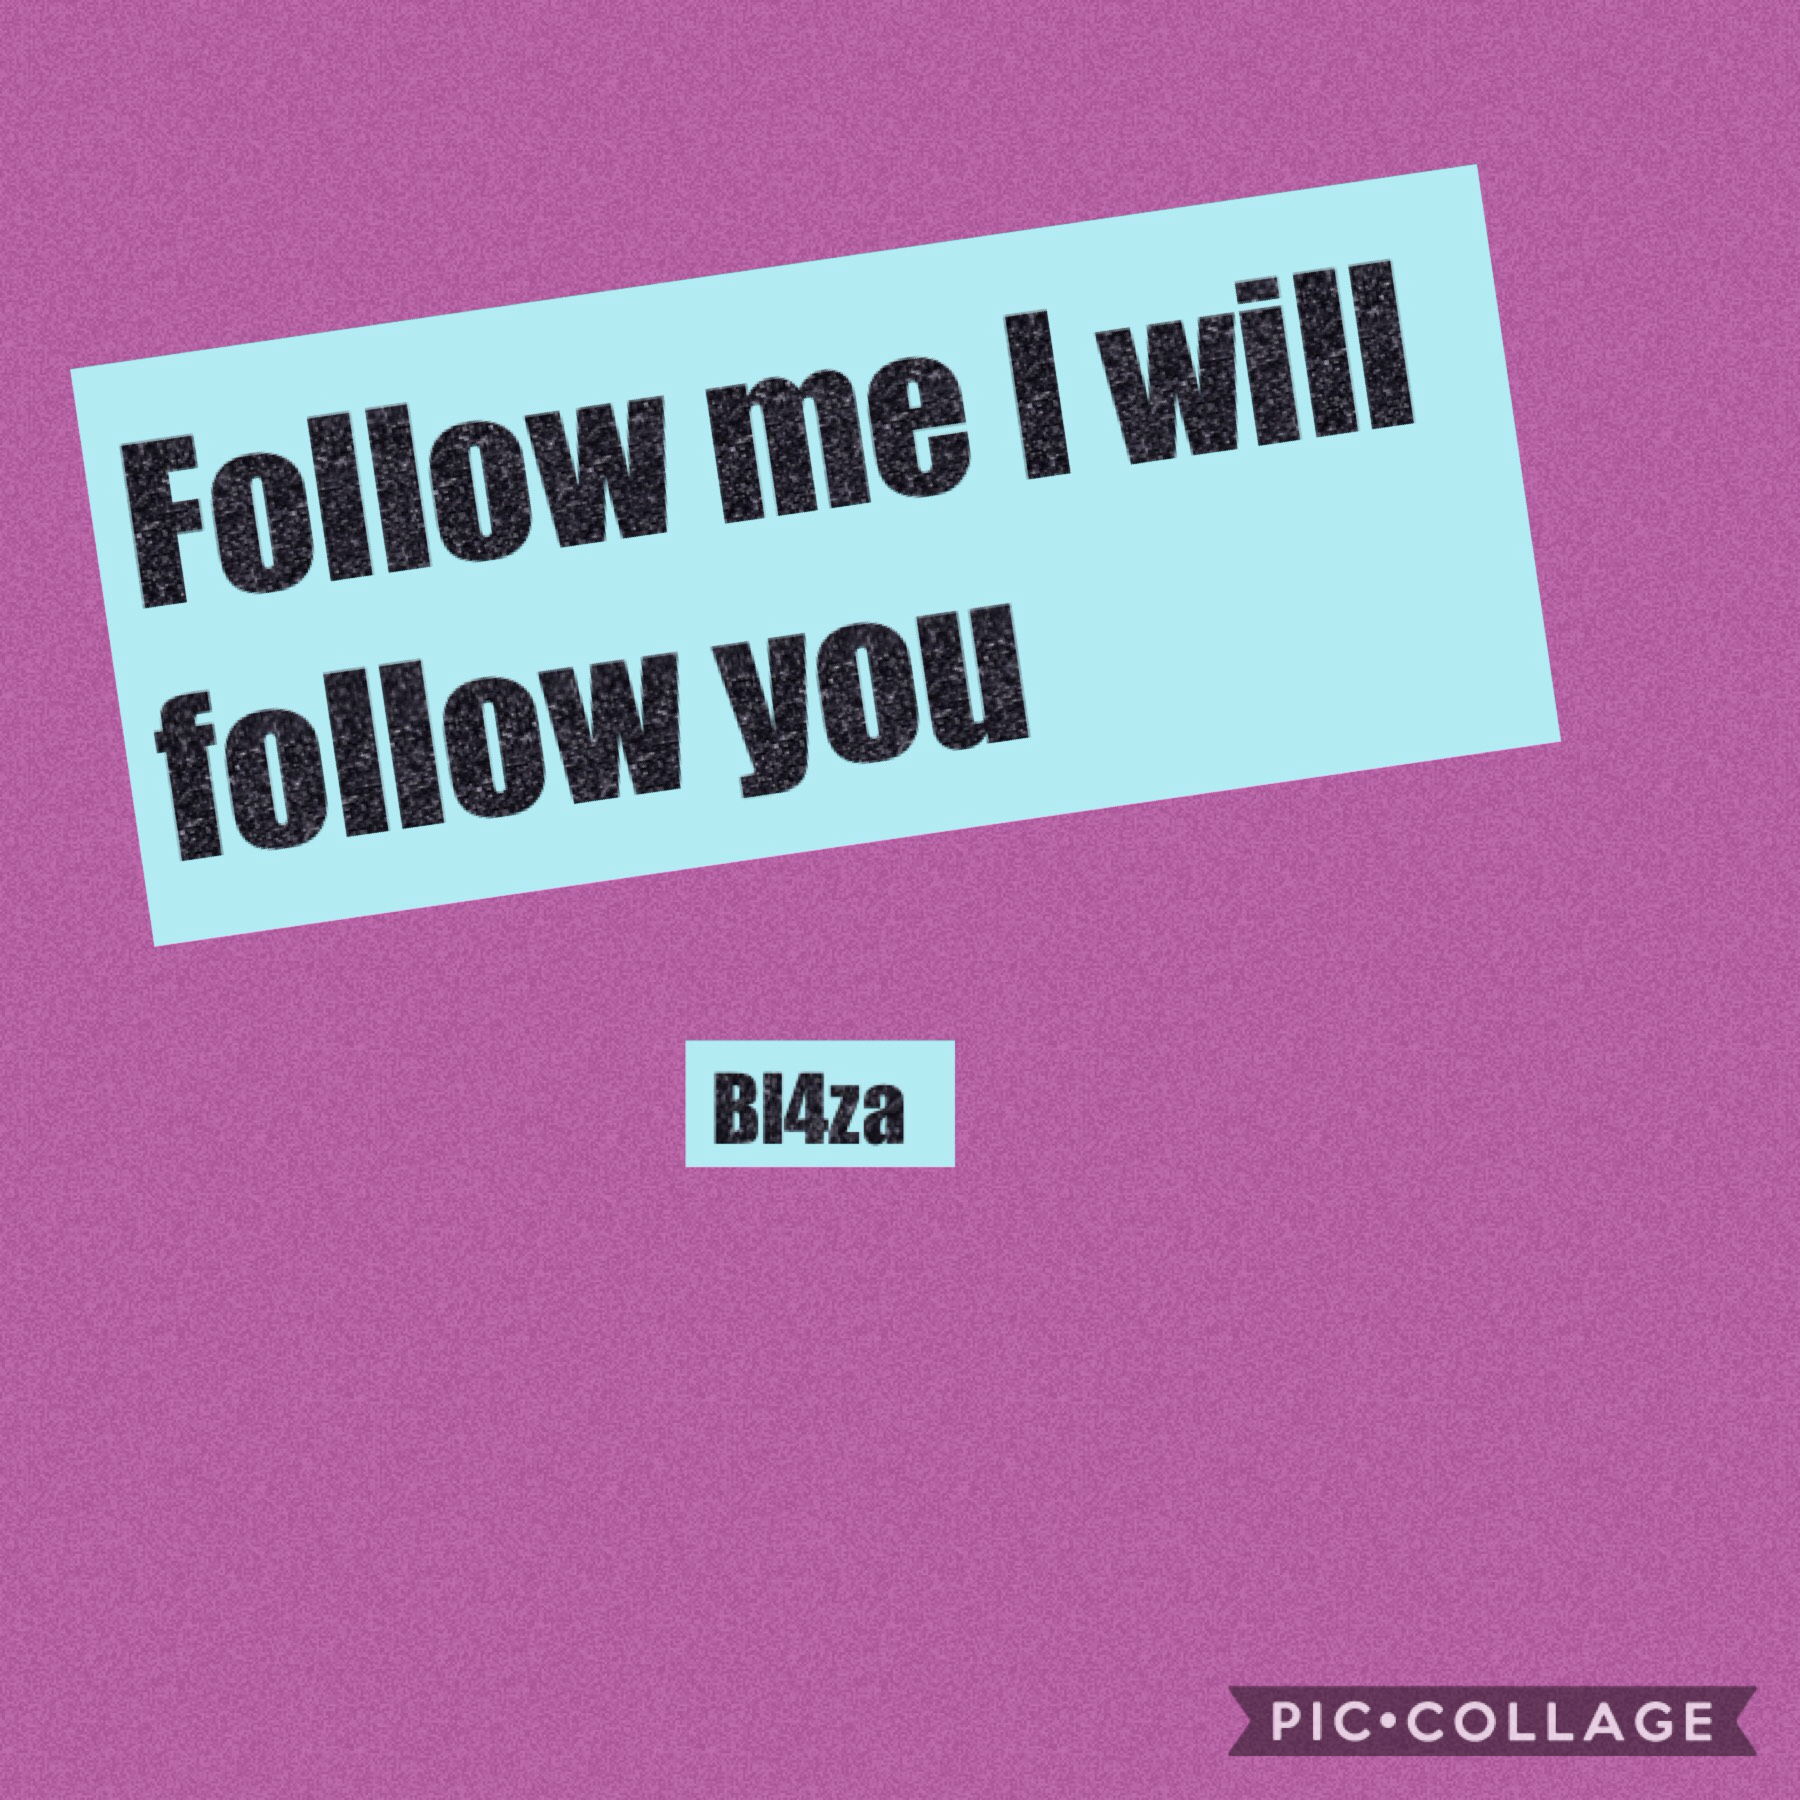 Follow me my name is Bl4za